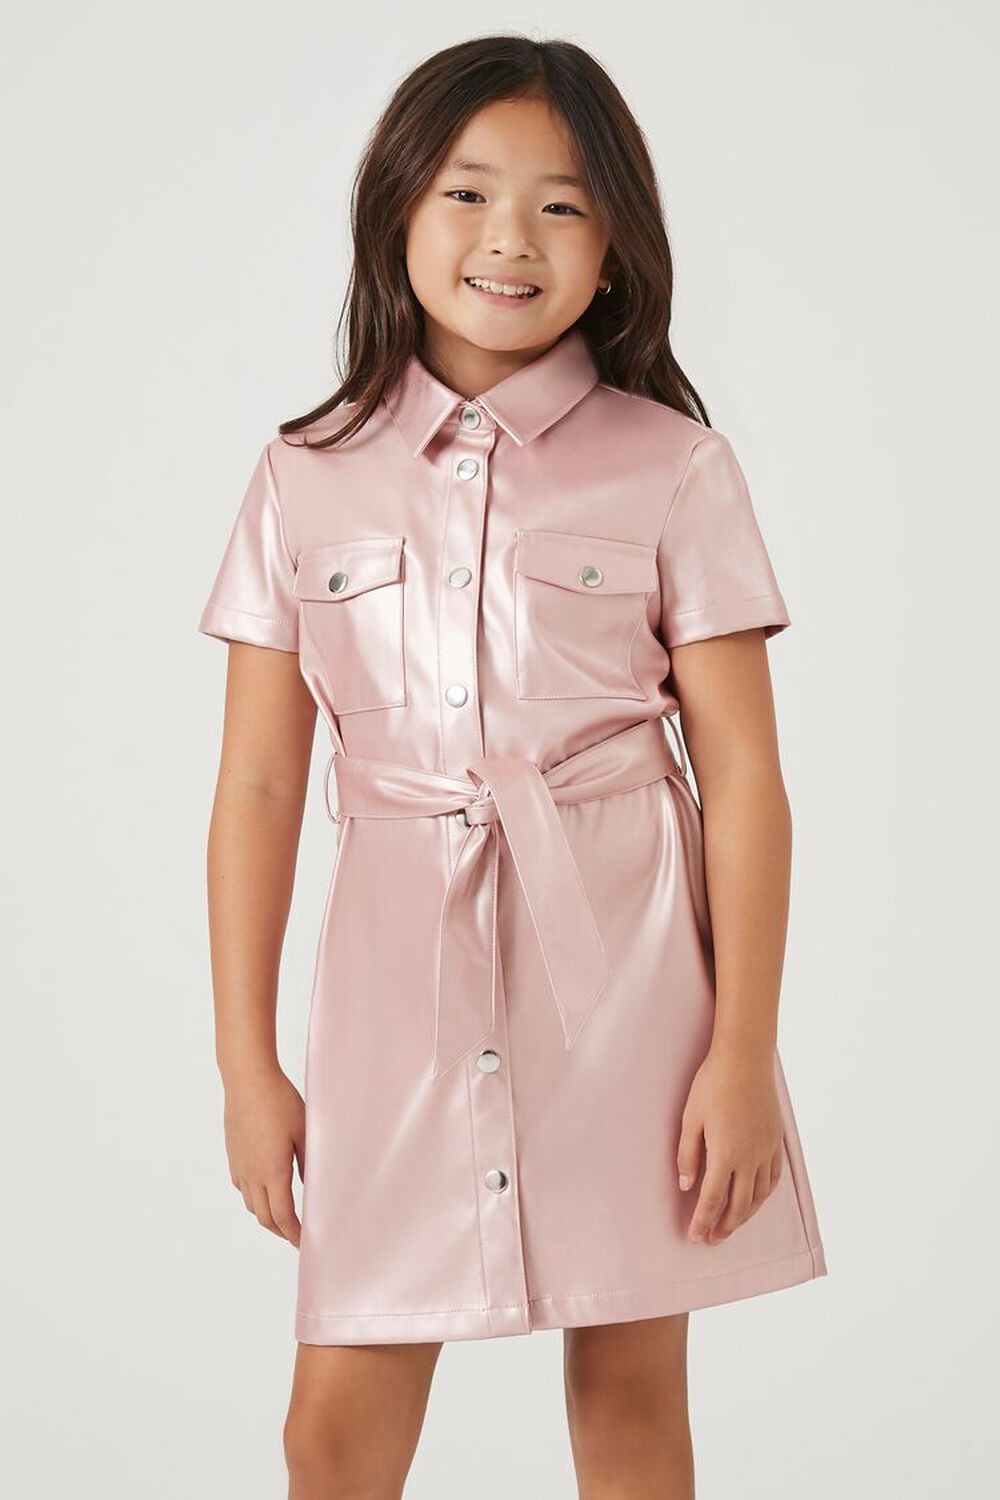 PINK Girls Faux Leather Shirt Dress (Kids), image 1